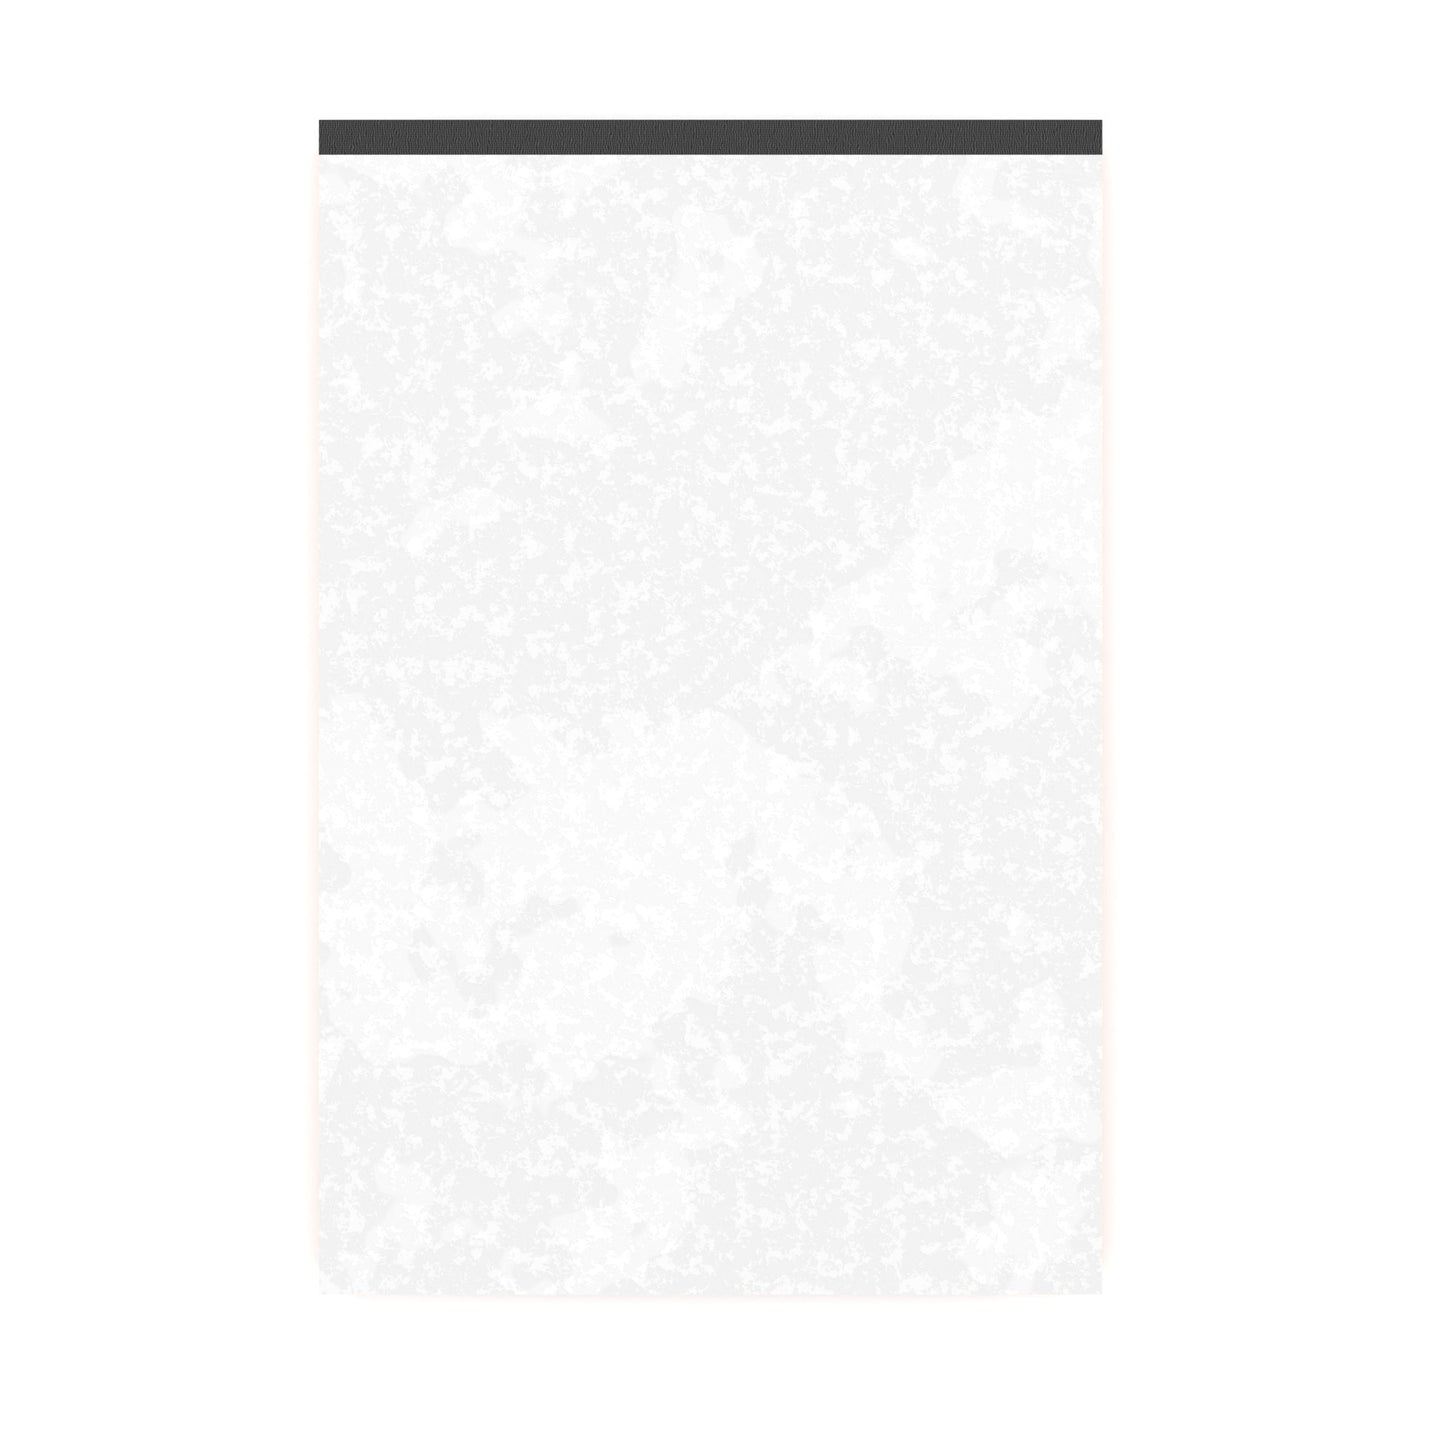 21069: Construction Paper, 6x9, 72 Sheets